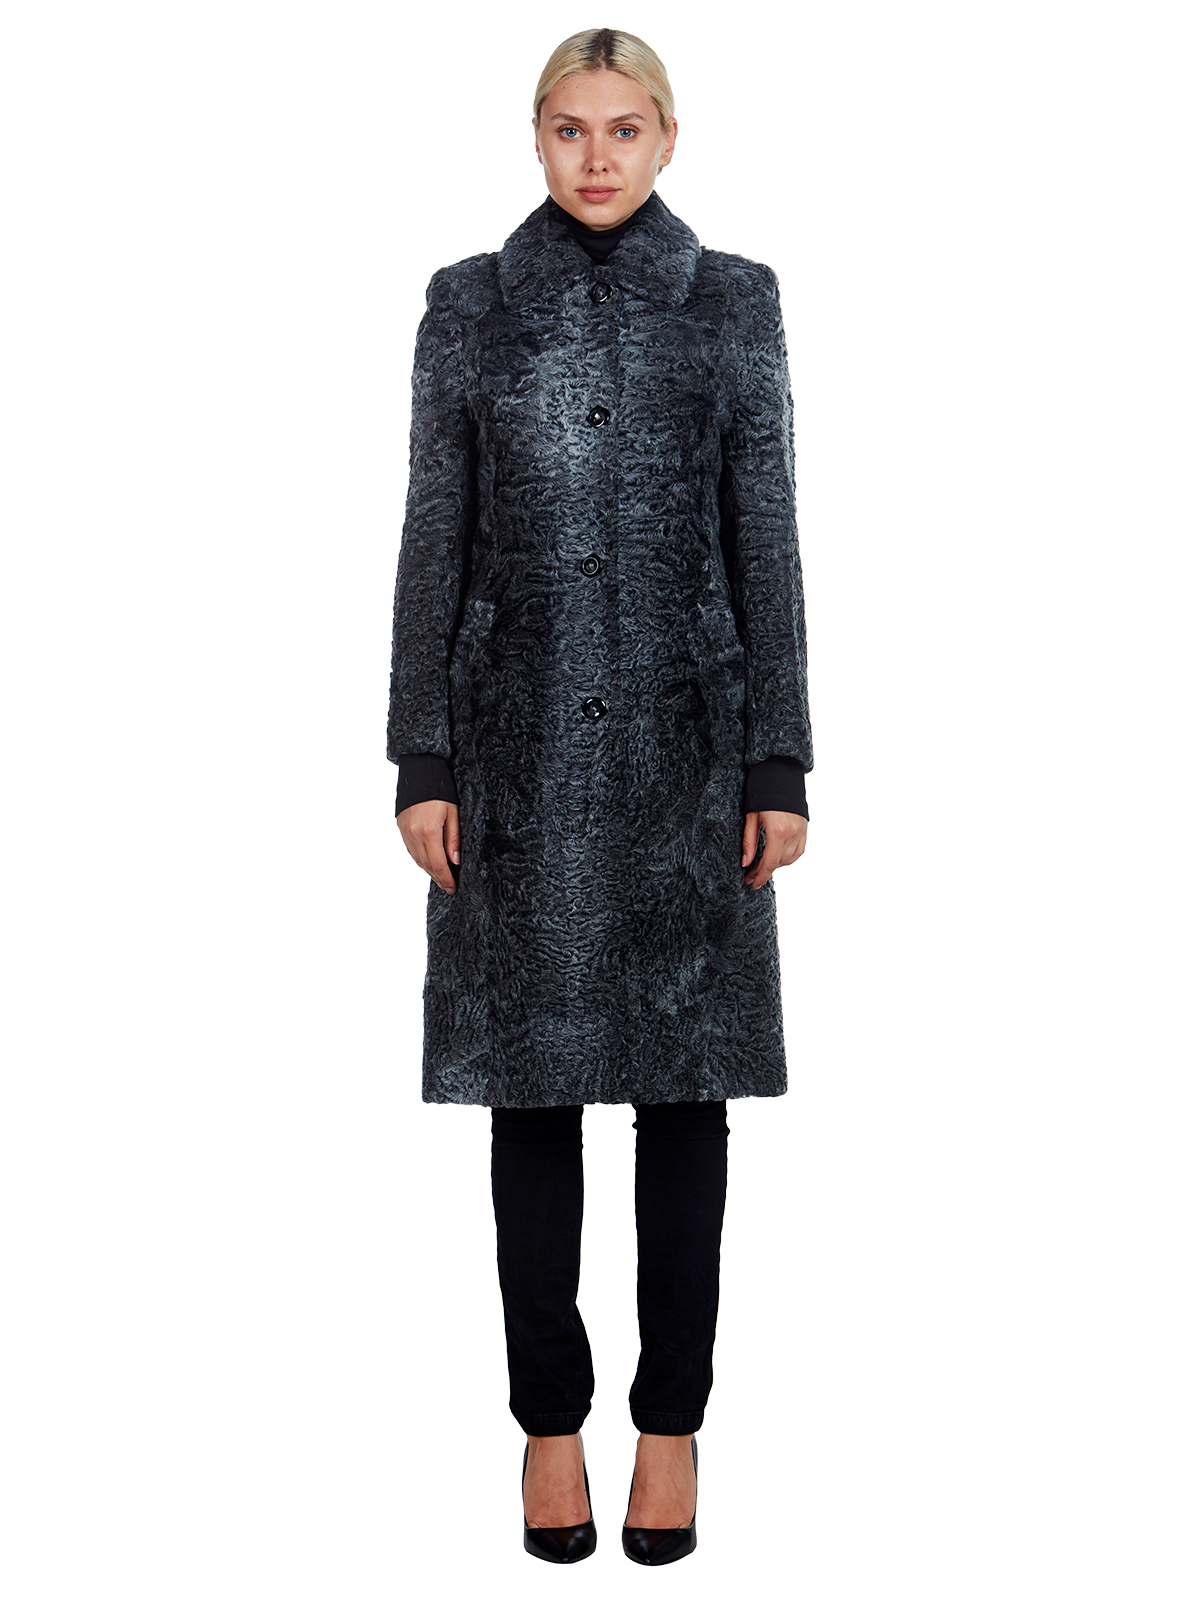 Tombolini Grey Persian Lamb Coat - Women's Fur Coat - Small| Estate Furs